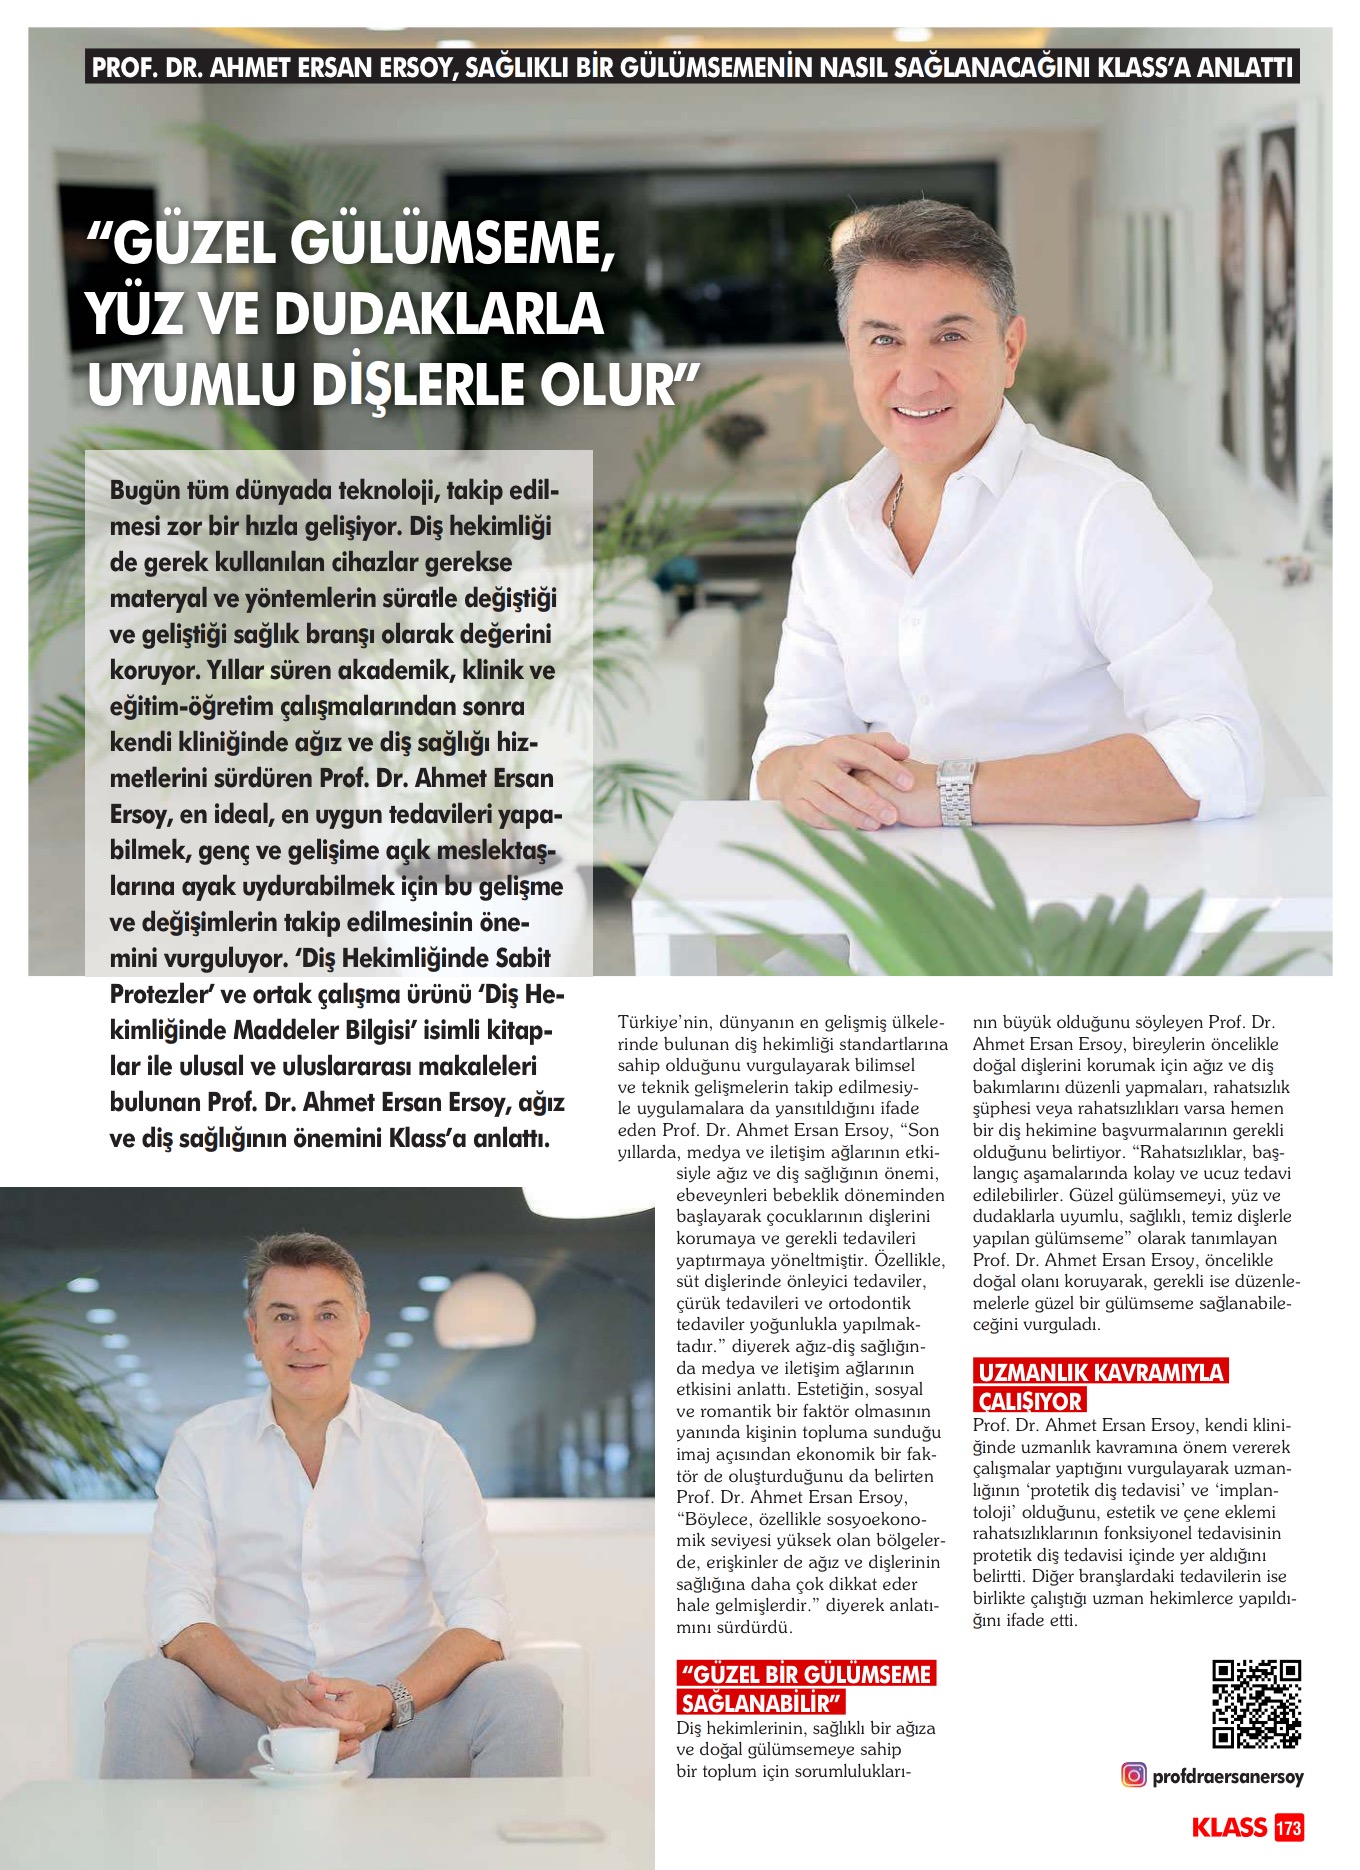 Prof. Dr. Ahmet Ersan Ersoy Klass Magazin Dergisine Konuk Oldu